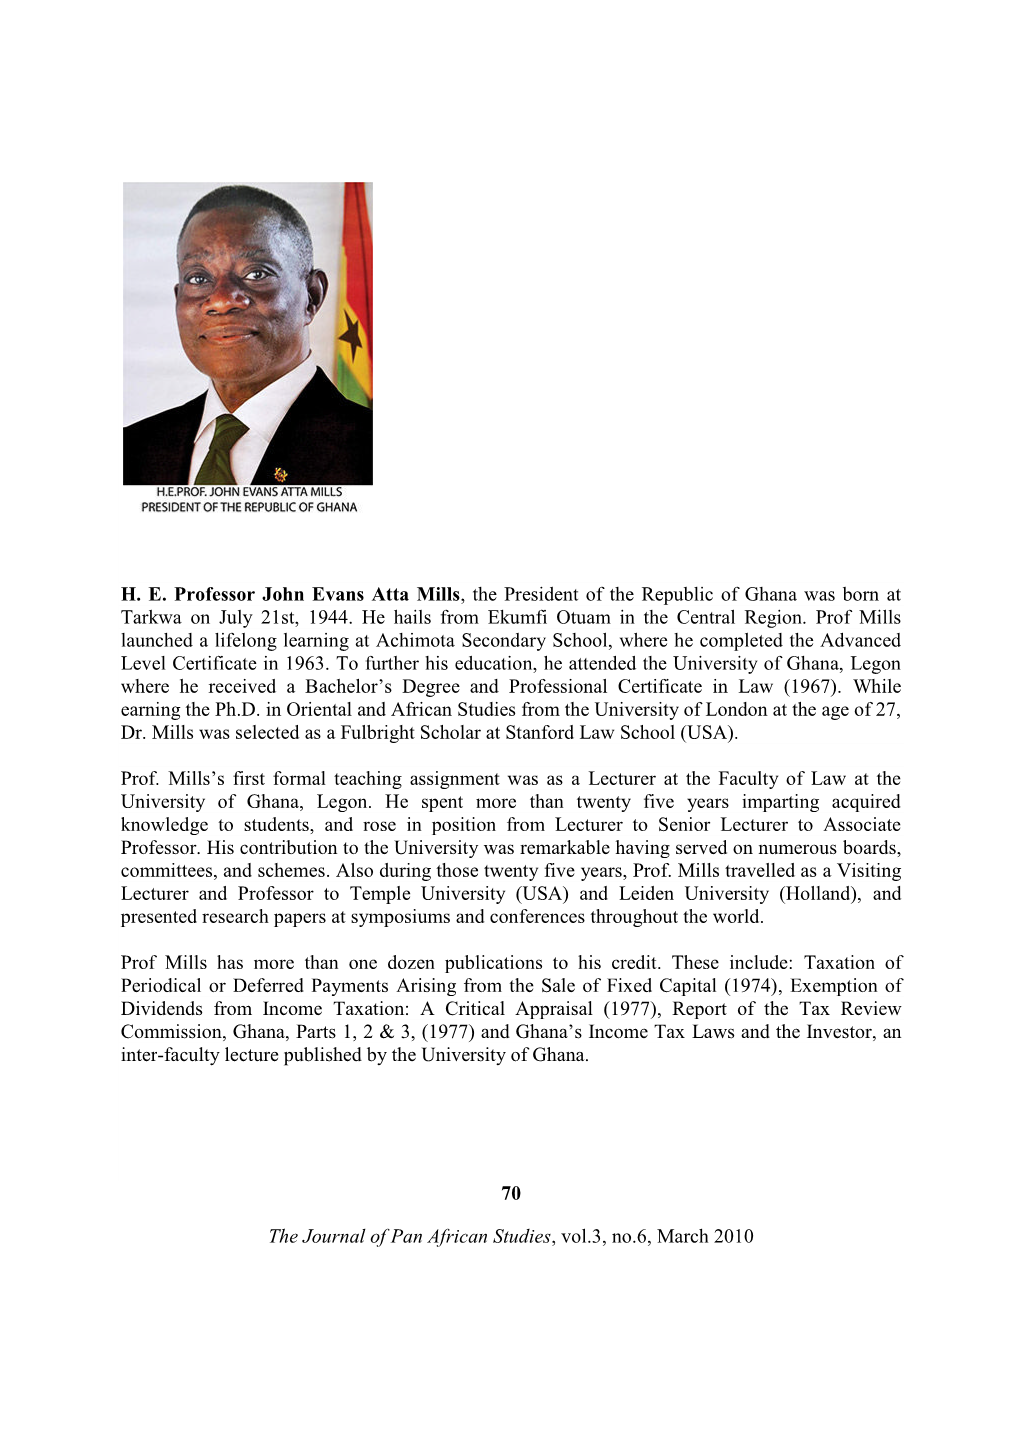 H. E. Professor John Evans Atta Mills, the President of the Republic of Ghana Was Born at Tarkwa on July 21St, 1944